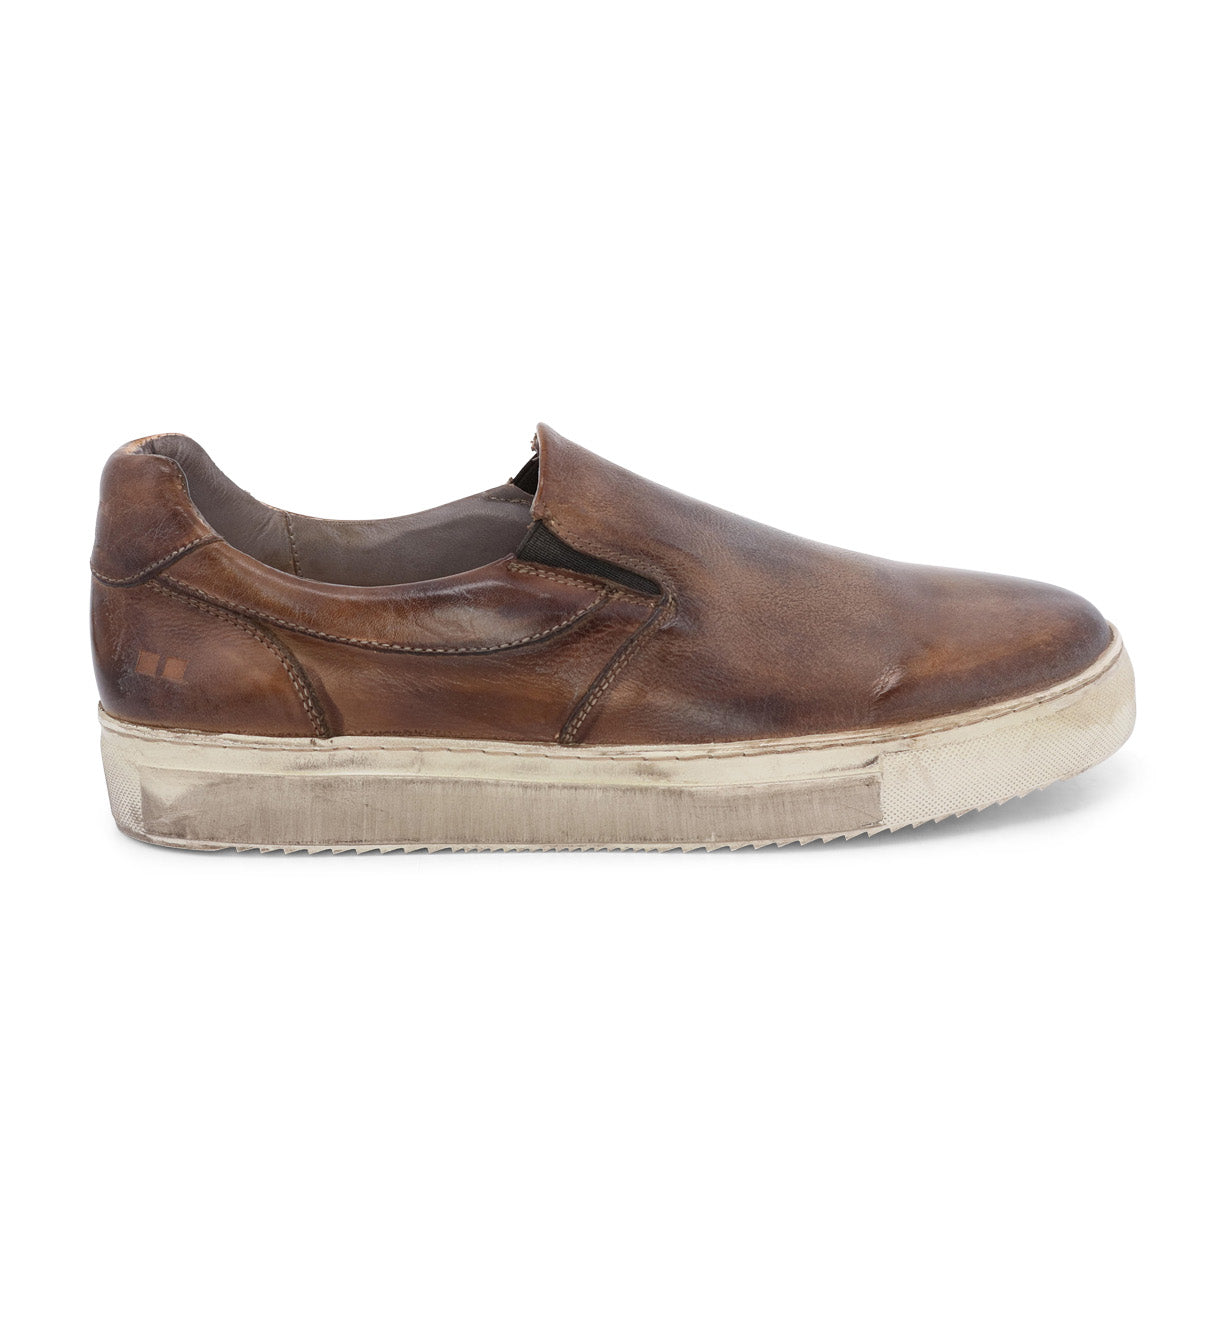 Harry by Bed Stu Men's brown leather slip on sneakers.